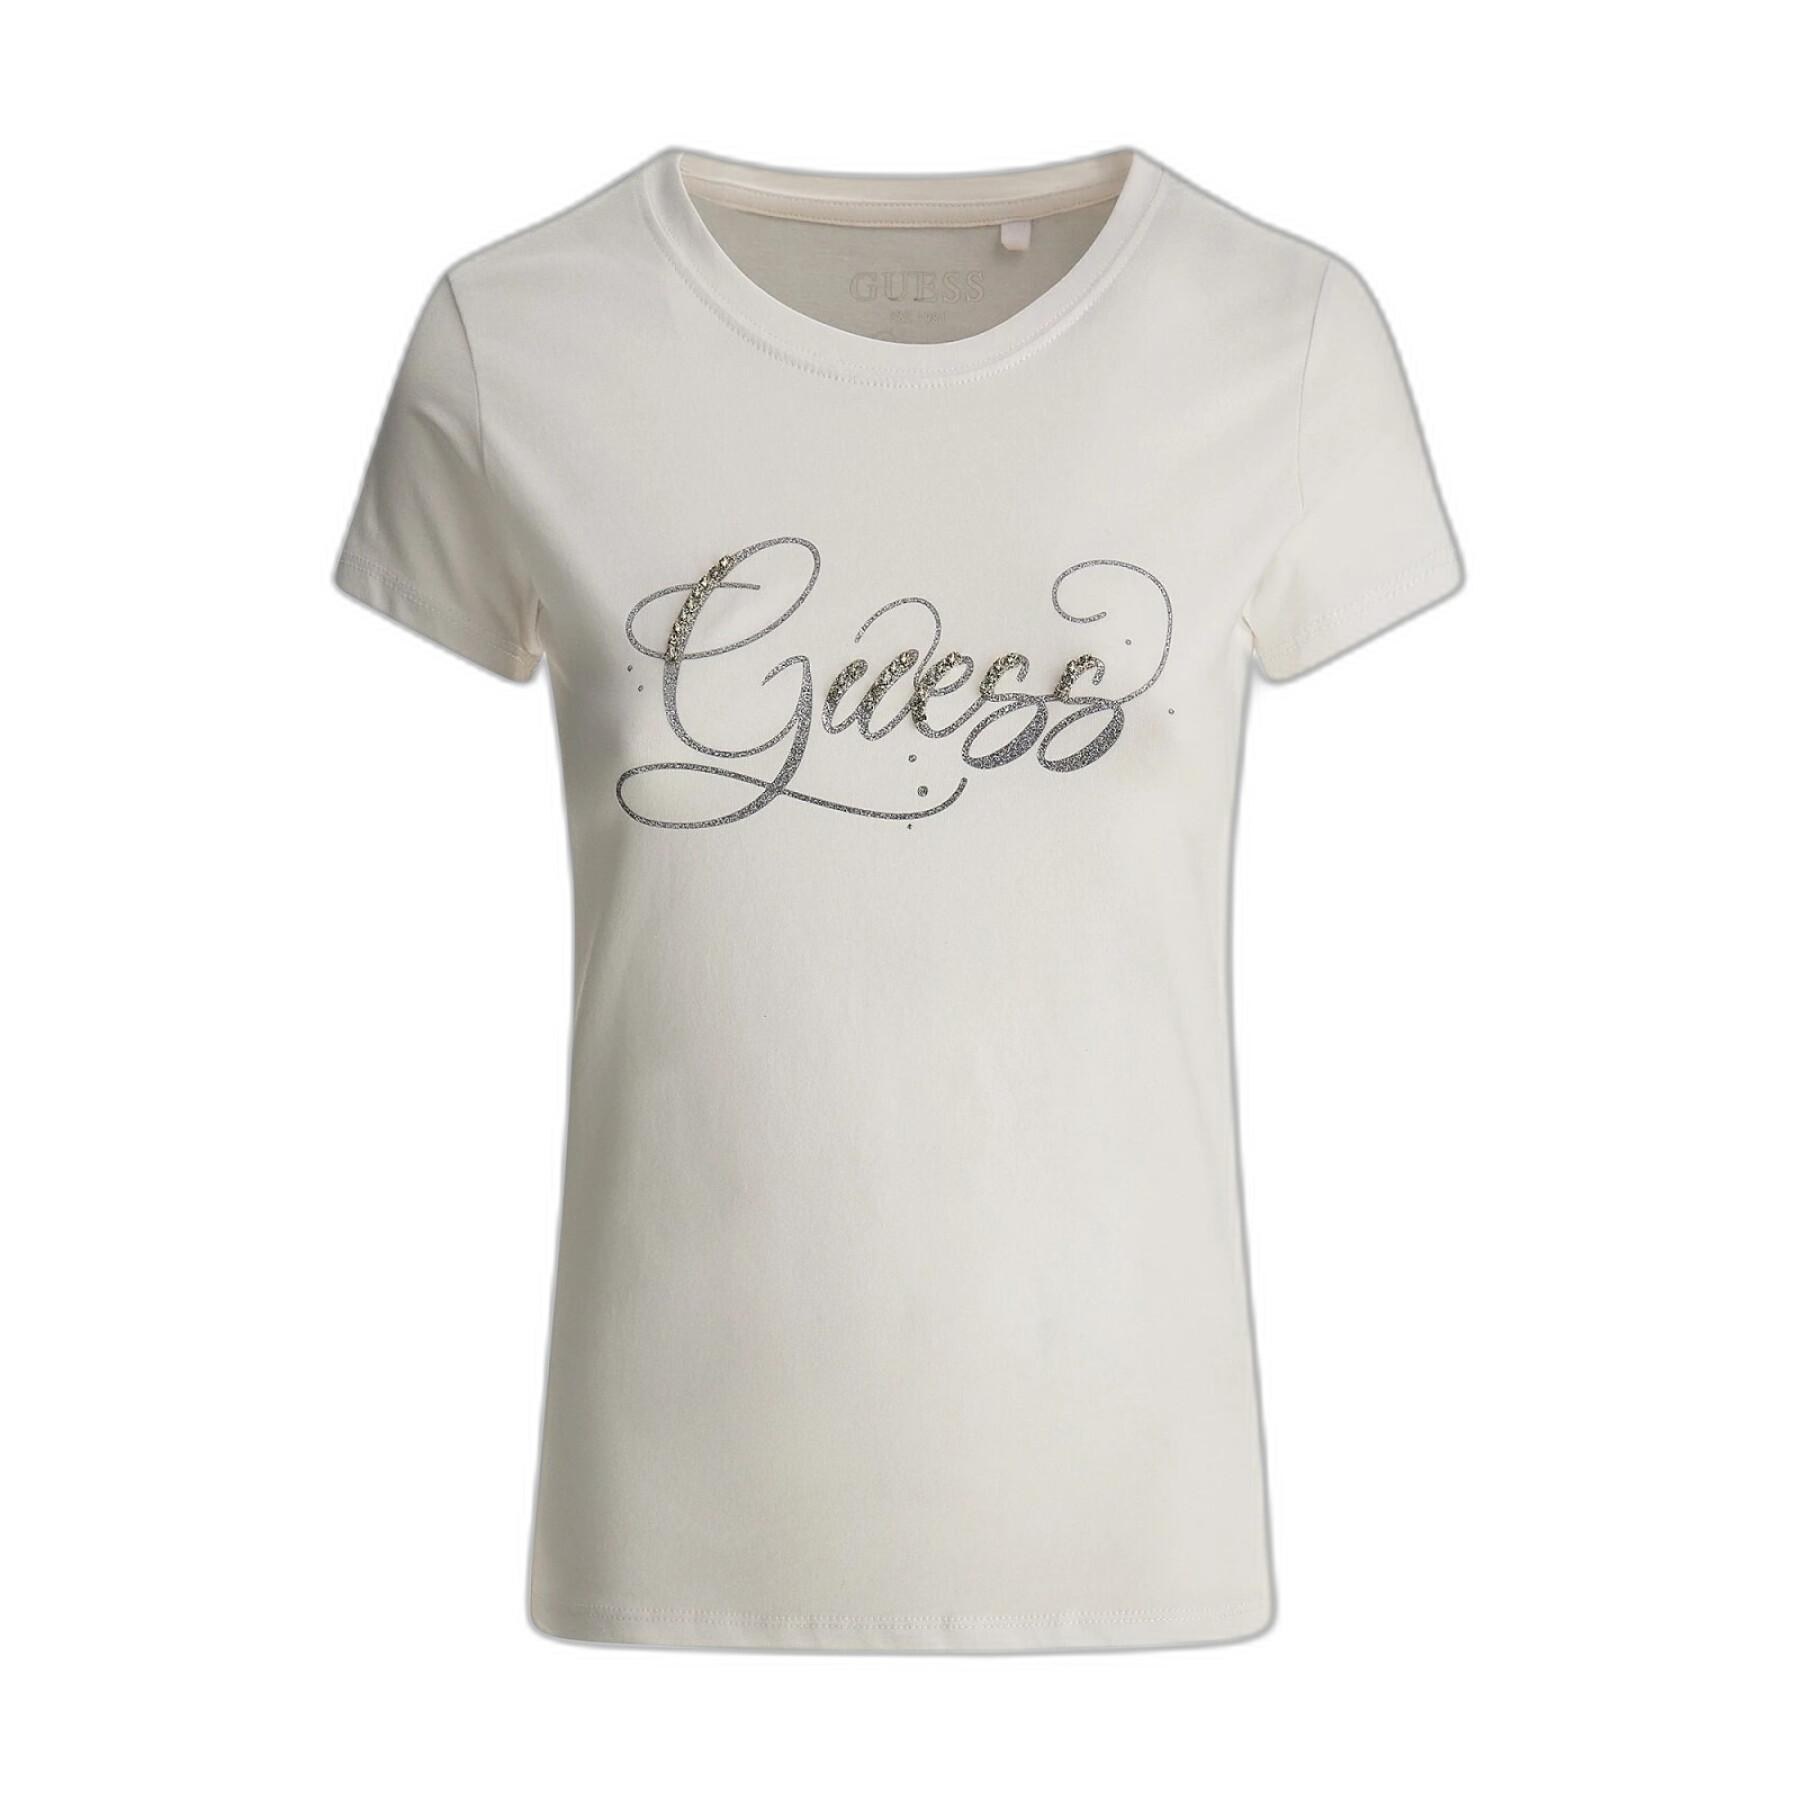 Women's short sleeve T-shirt Guess Glitzy R4